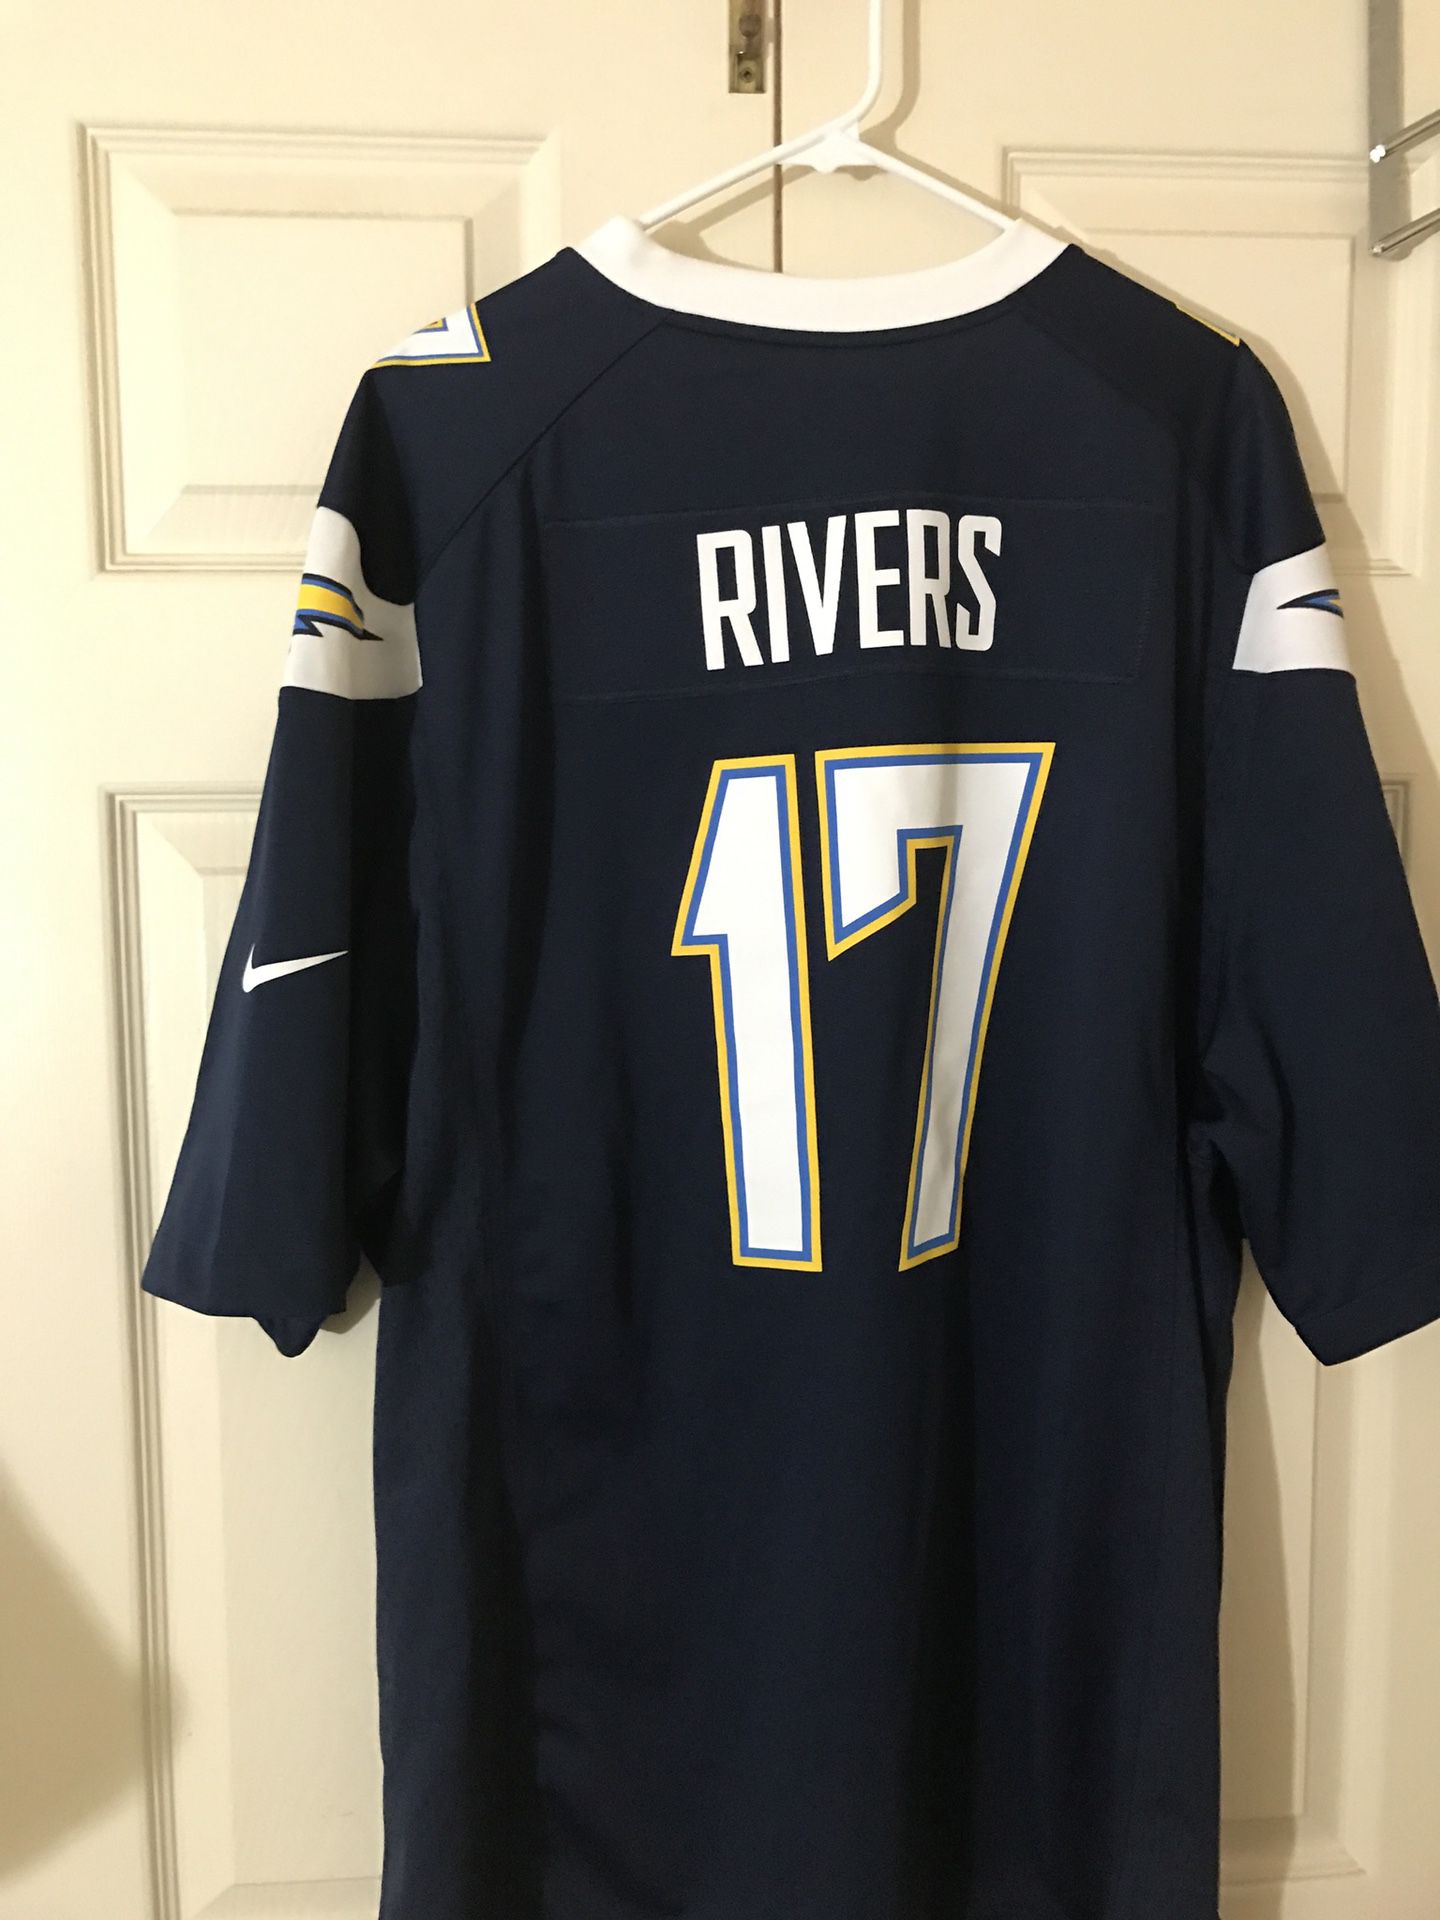 Rivers jersey